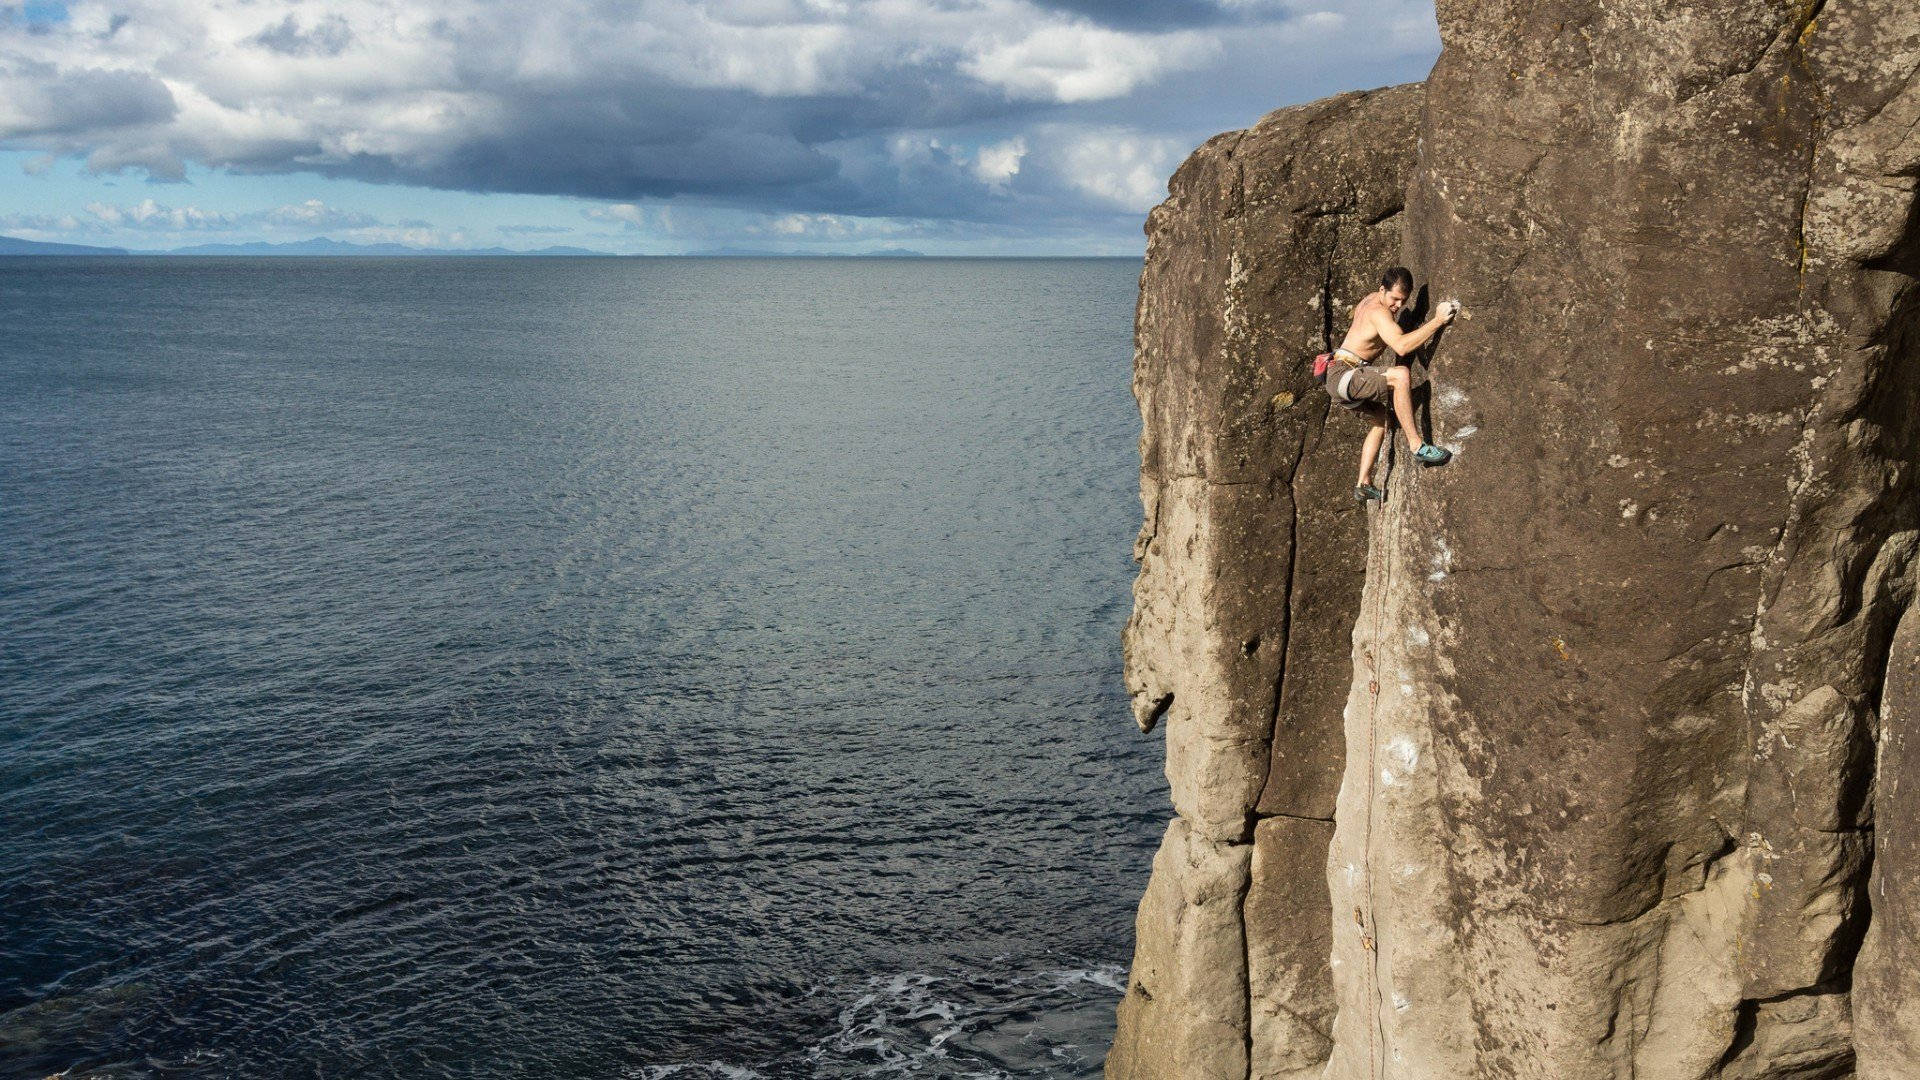 Topless Man Rock Climbing Aerial Photo Wallpaper